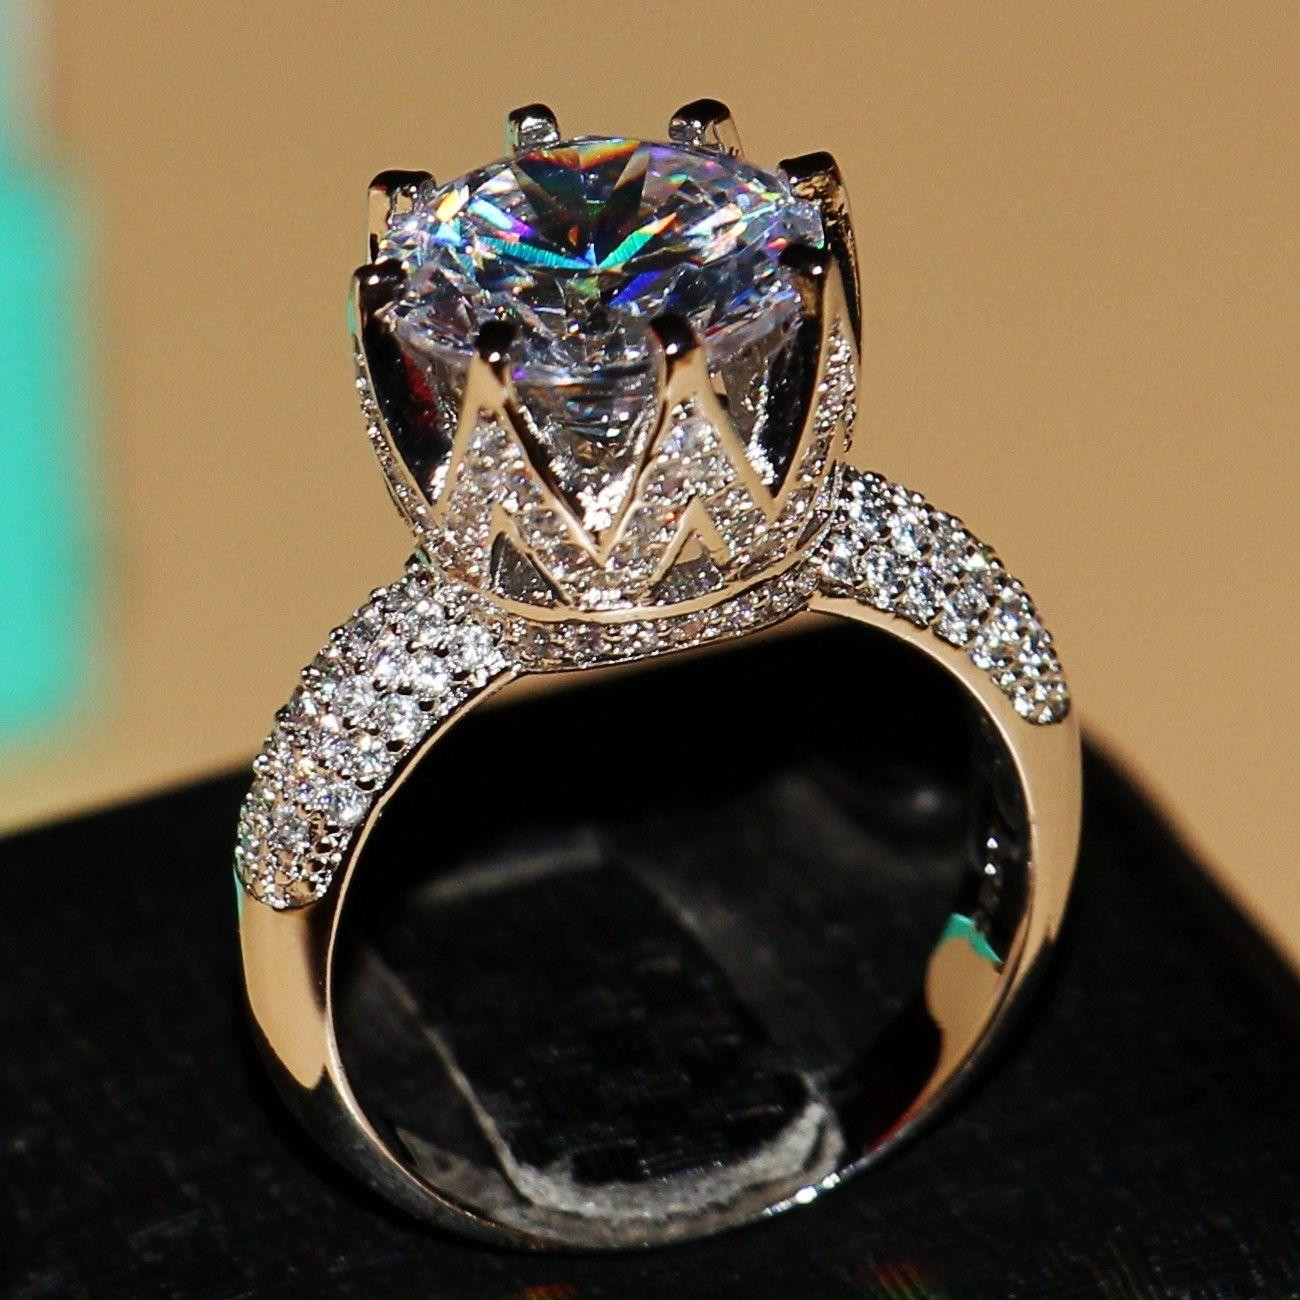 Big Diamond Wedding Rings
 2017 Victoria Wieck 8ct Big Stone Solitaire 925 Sterling